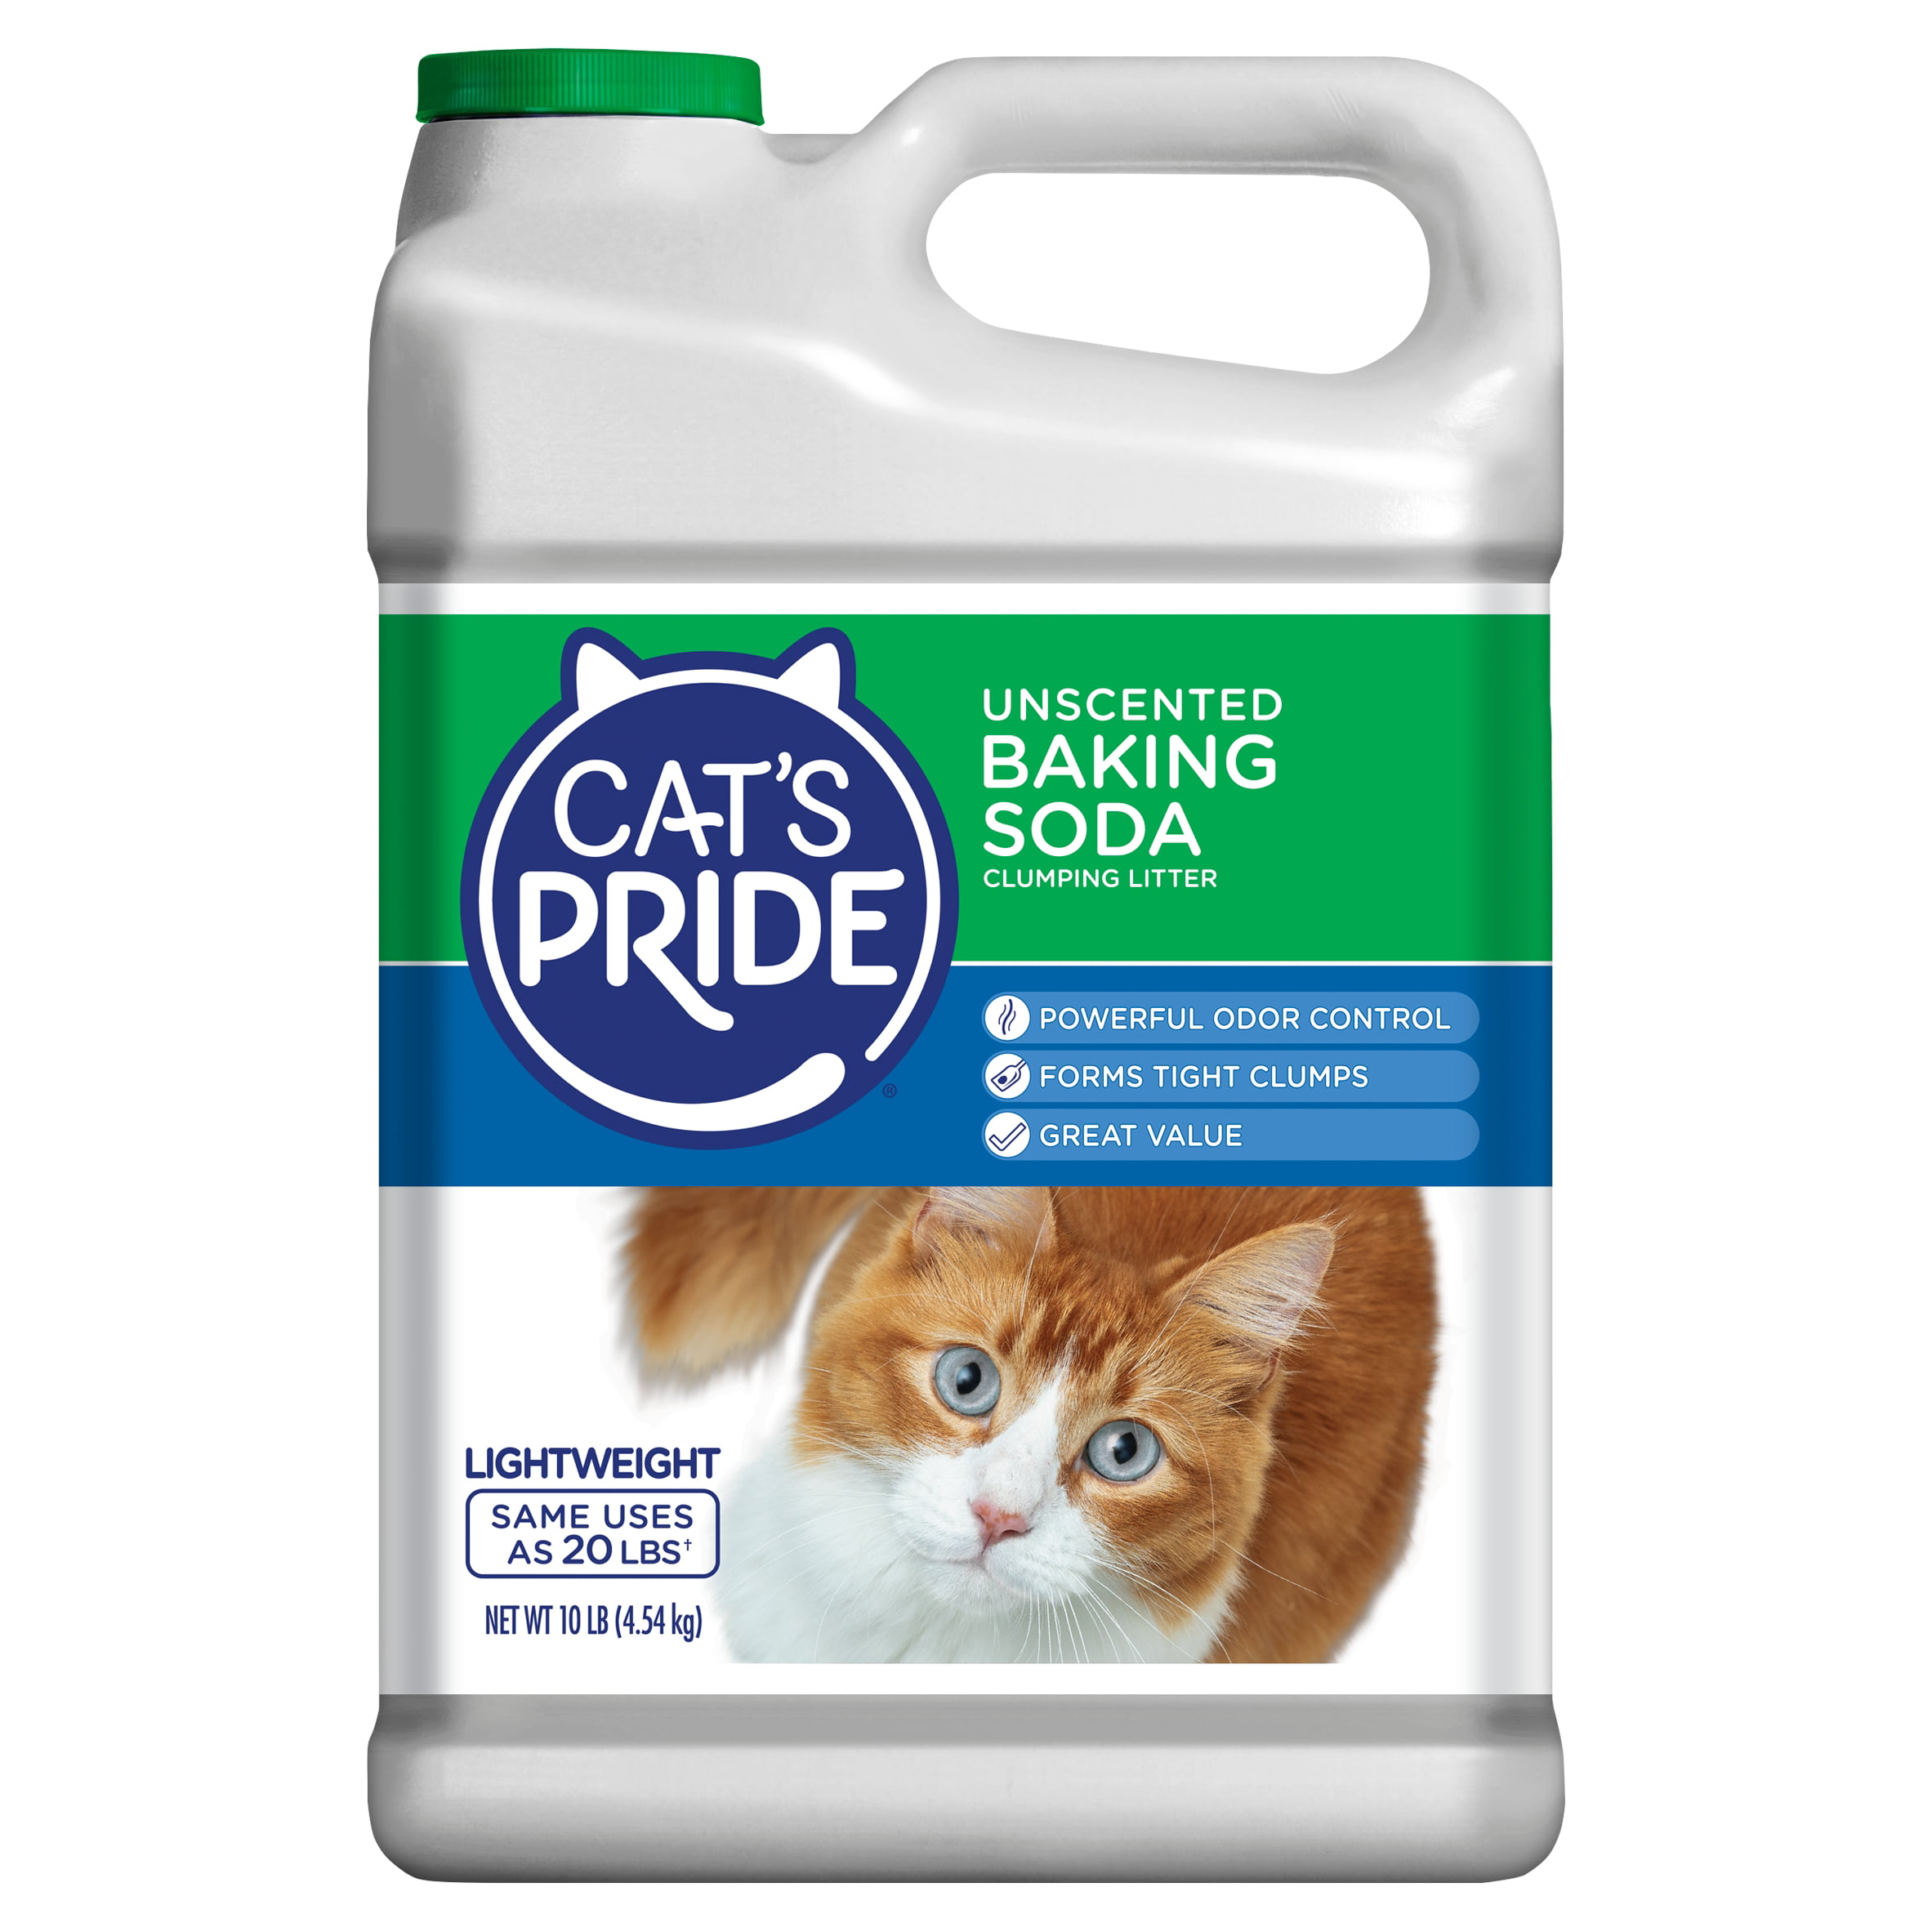 Cat's Pride Baking Soda Unscented Clumping Clay Cat Litter, 10lb jug